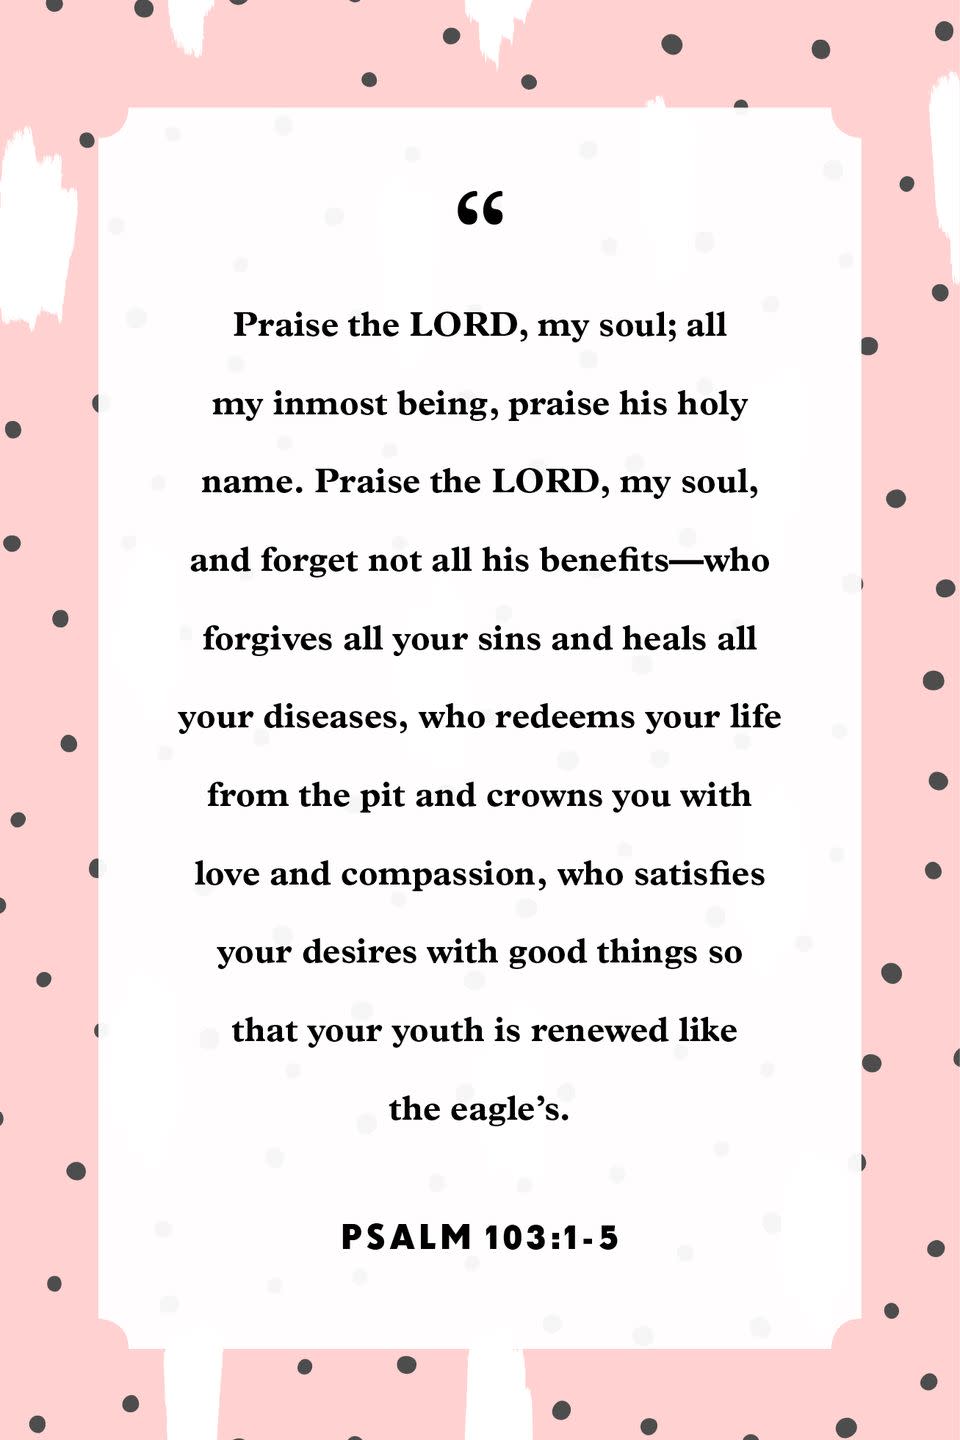 Psalm 103:1-5